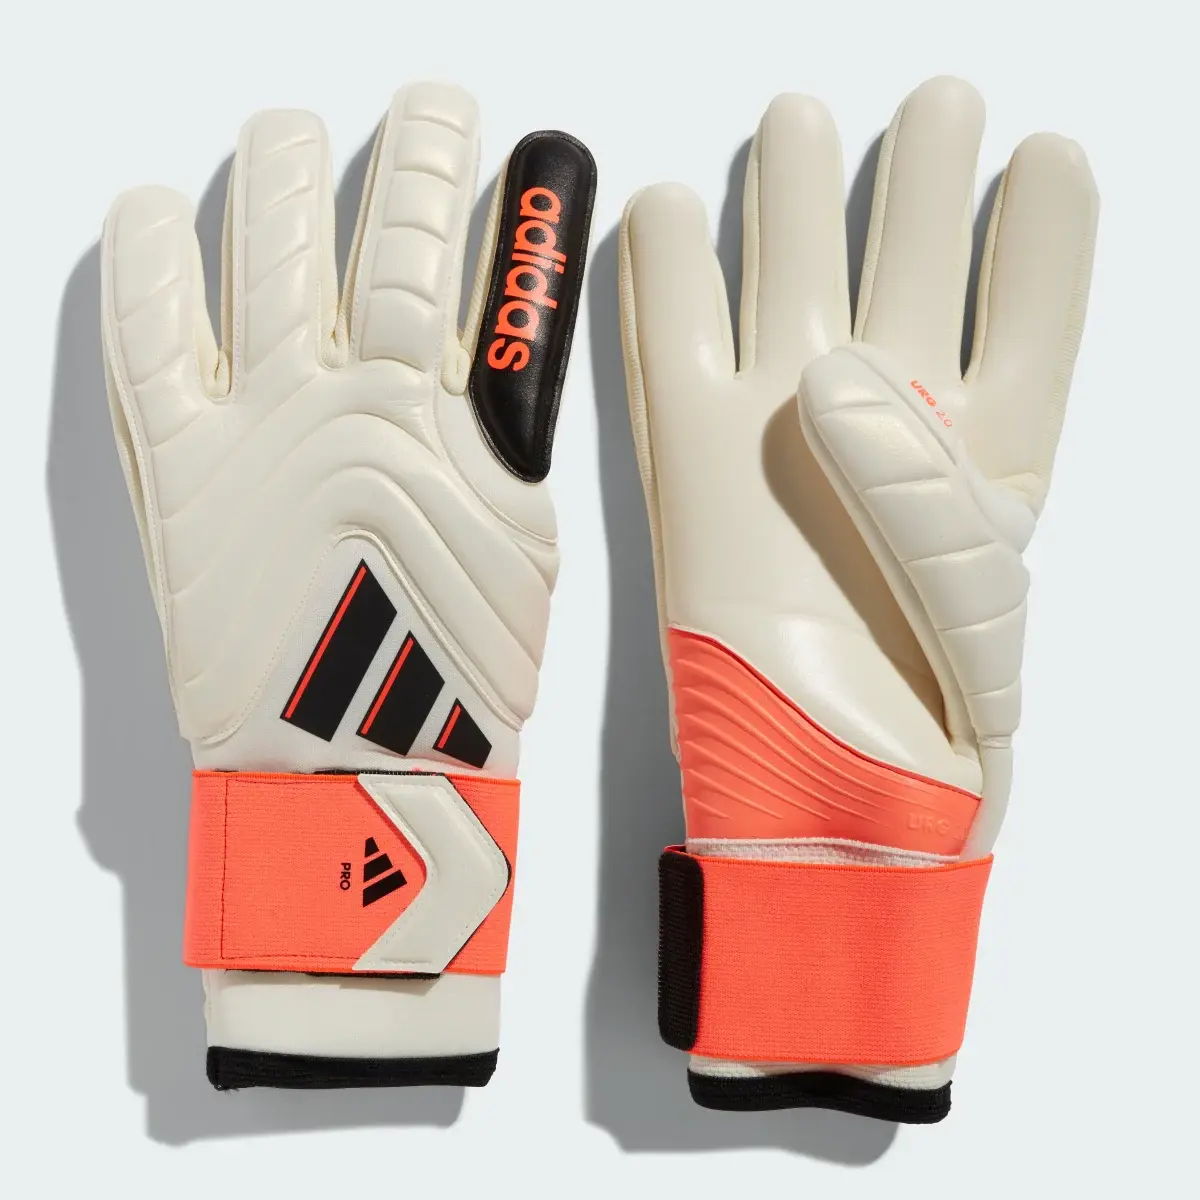 Adidas Copa Pro Goalkeeper Gloves. 3